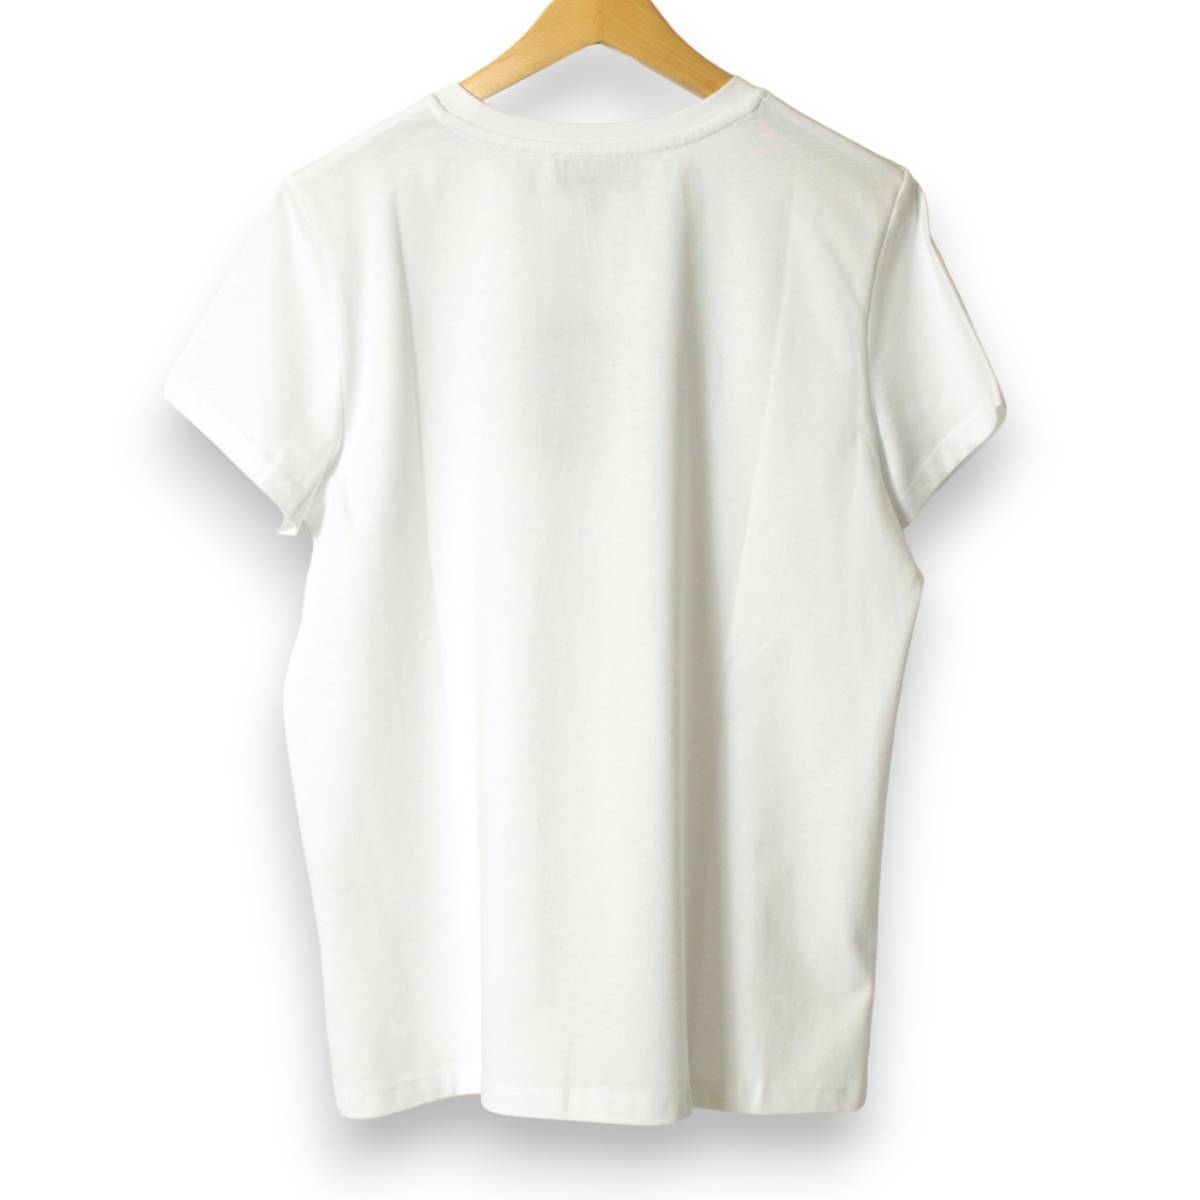 A.P.C. A.P.C. lady's short sleeves T-shirt VPC Logo flocky print white size XL